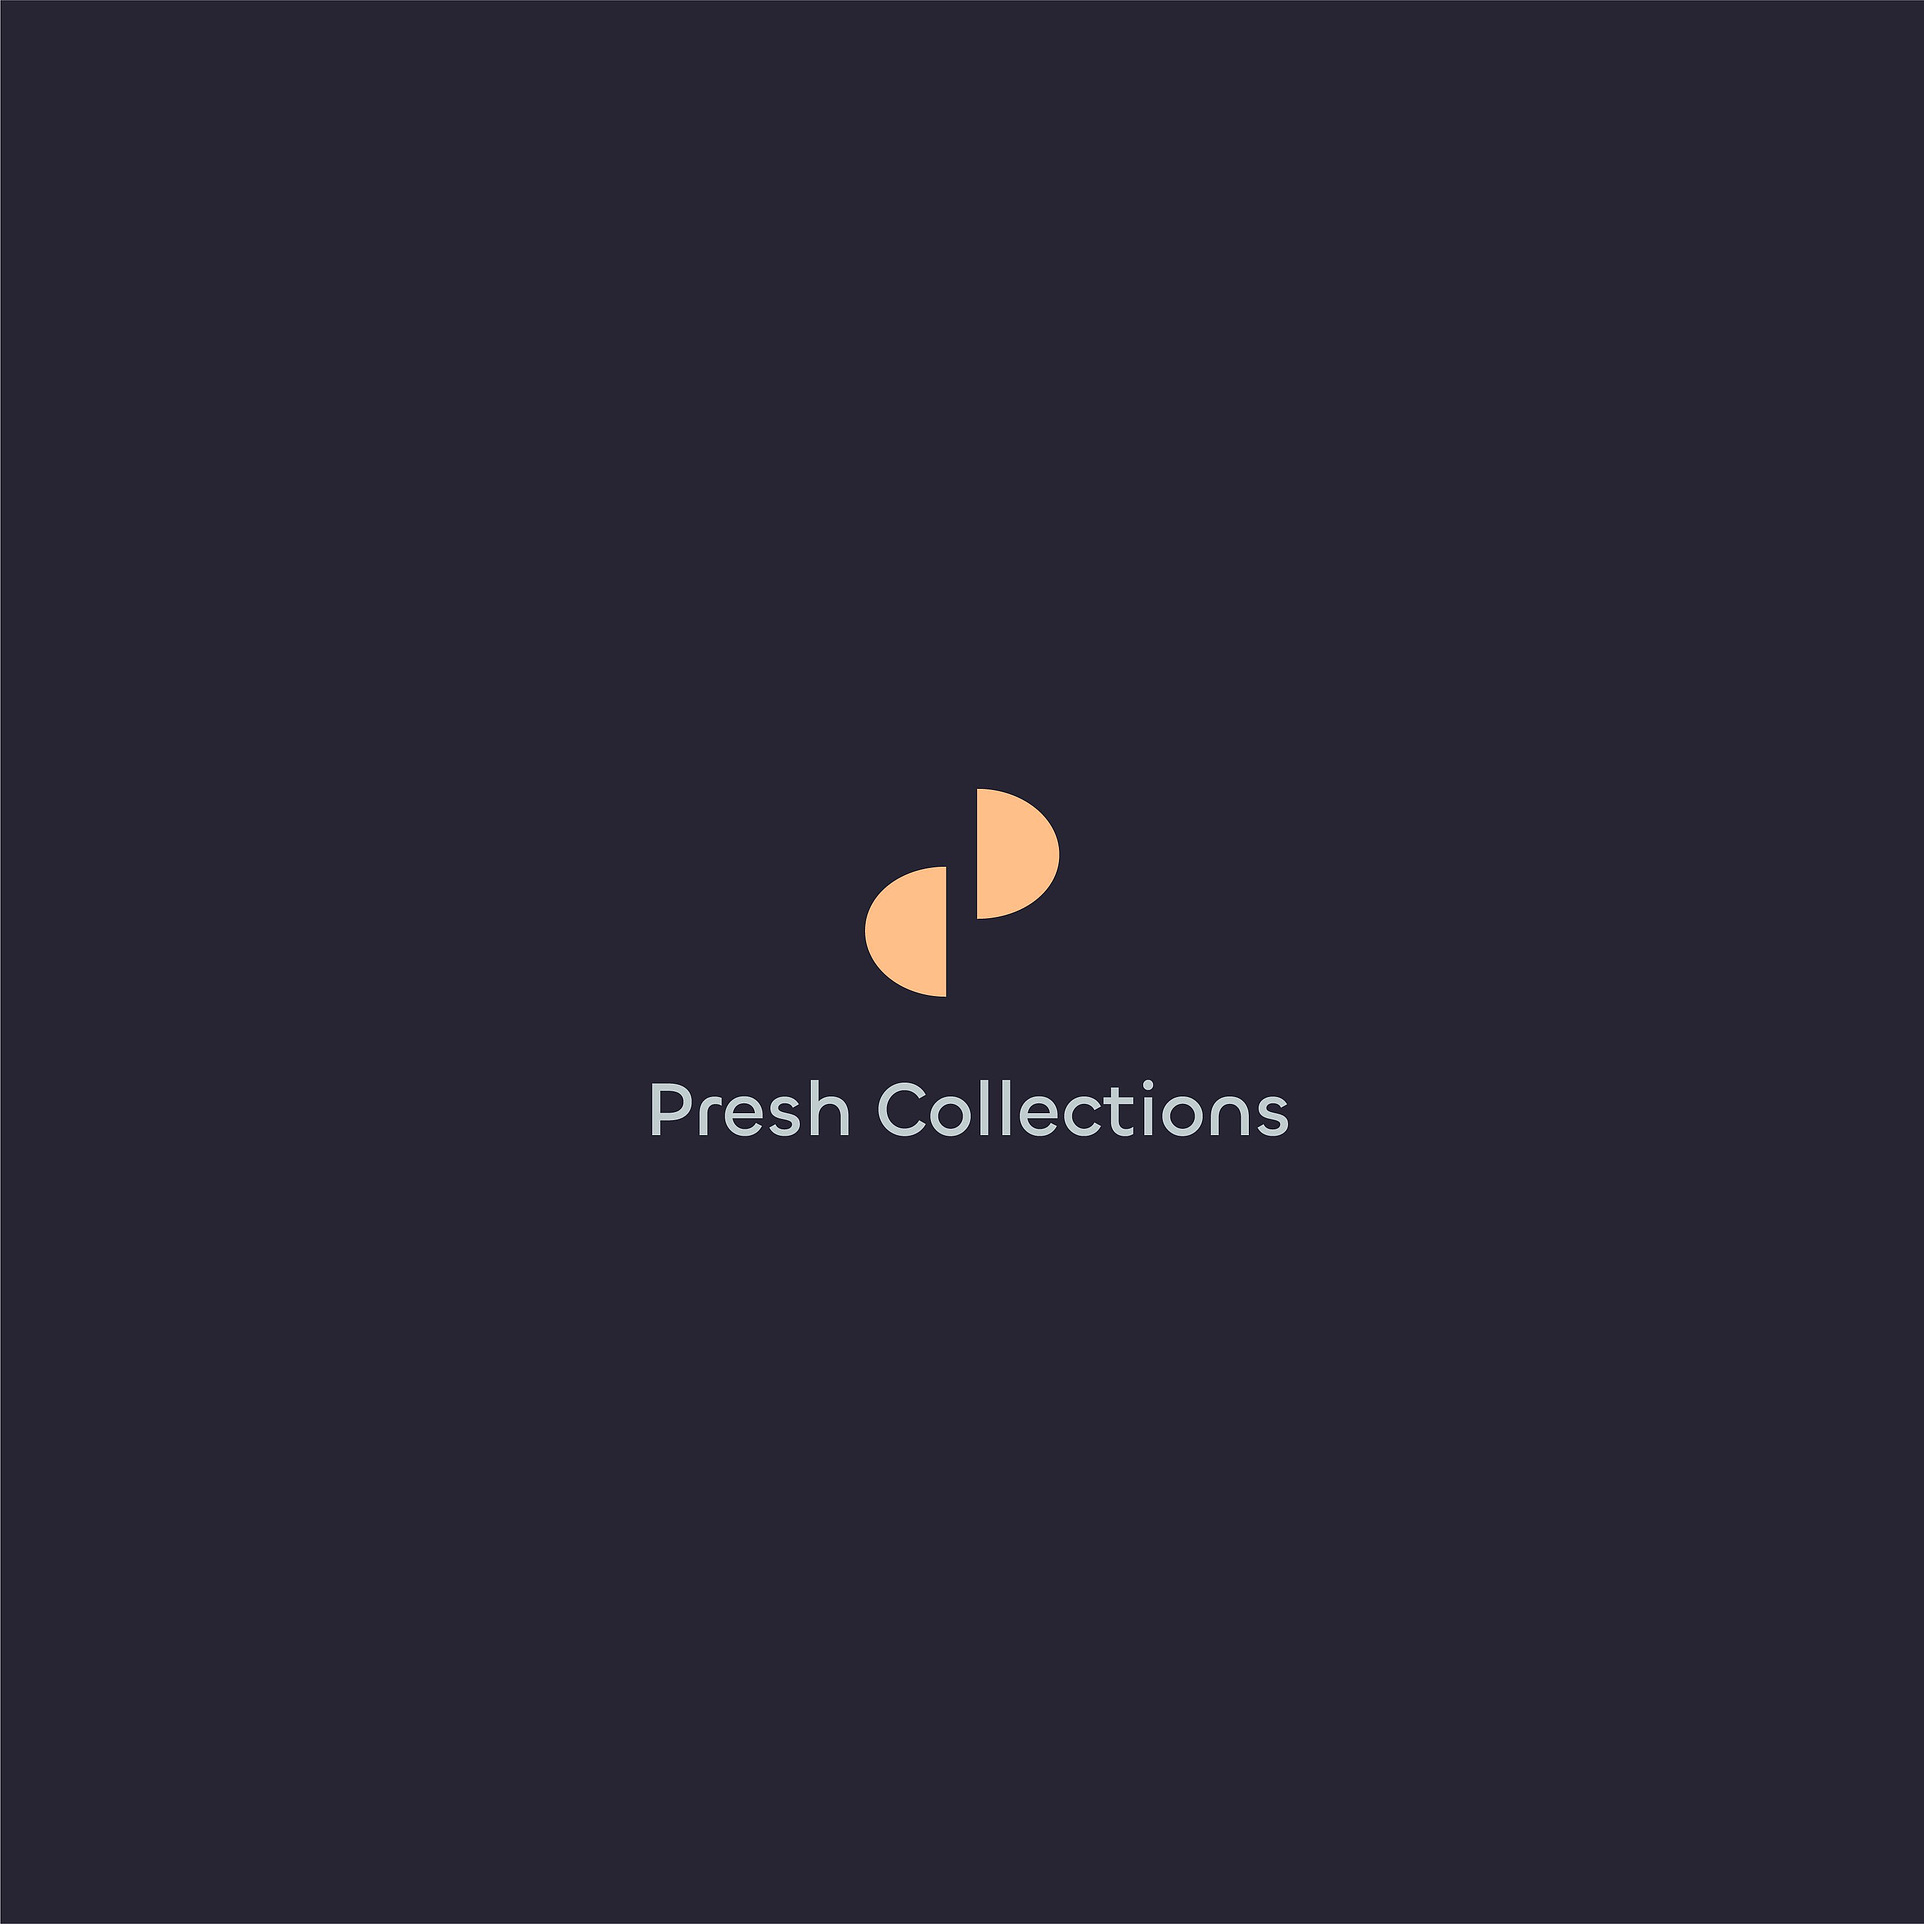 Presh collection